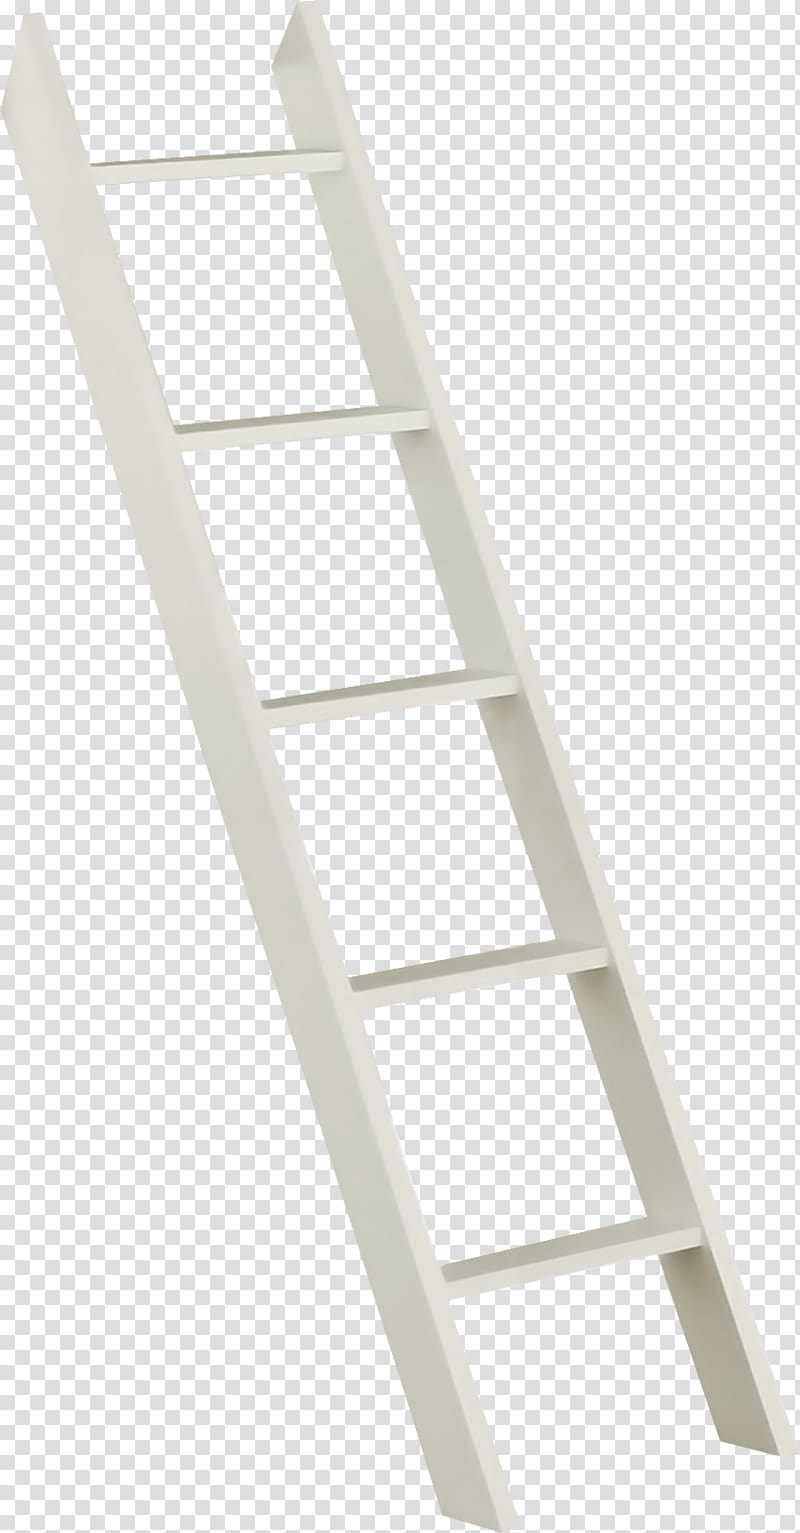 white ladder illustration, Ladder Stairs, White Ladder transparent background PNG clipart